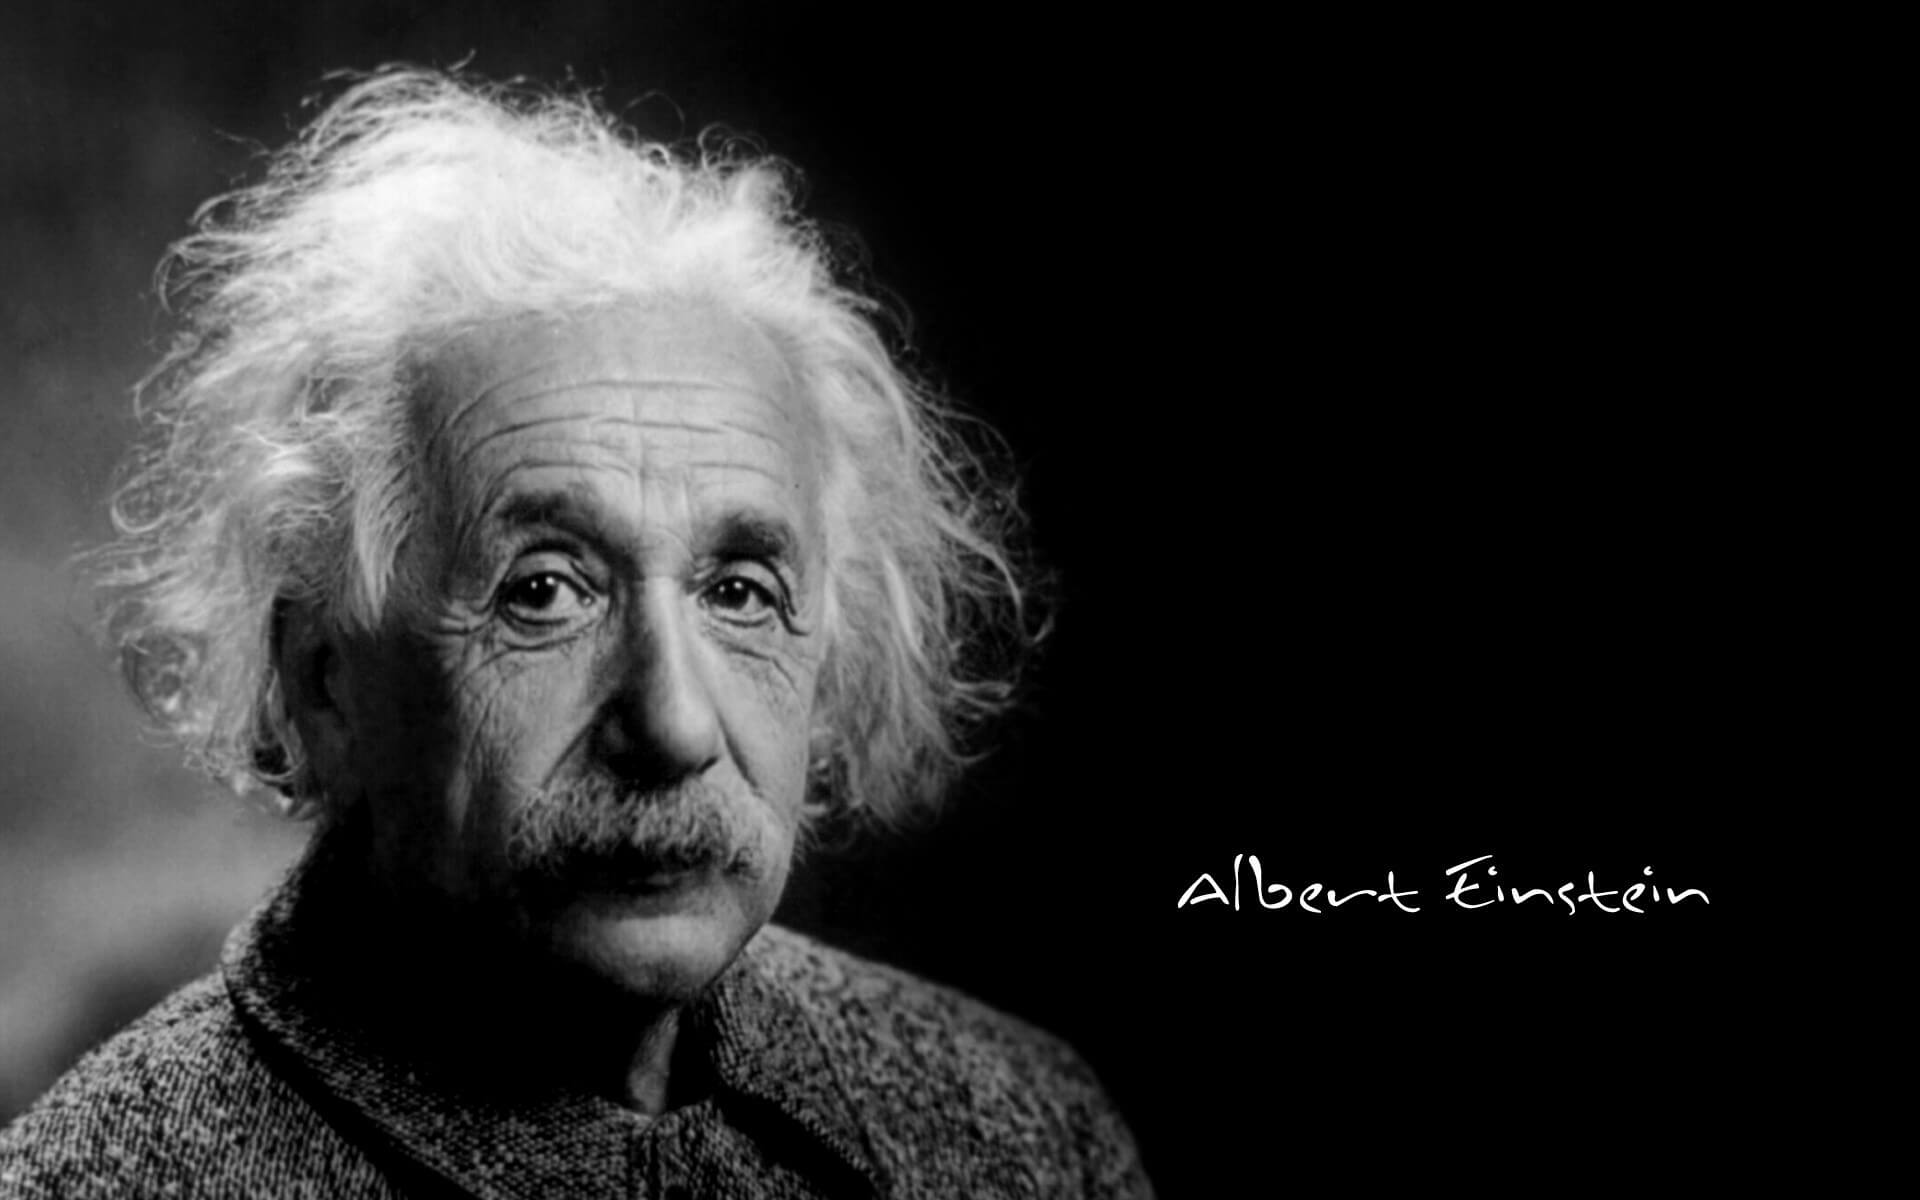 A short biography of Albert Einstein